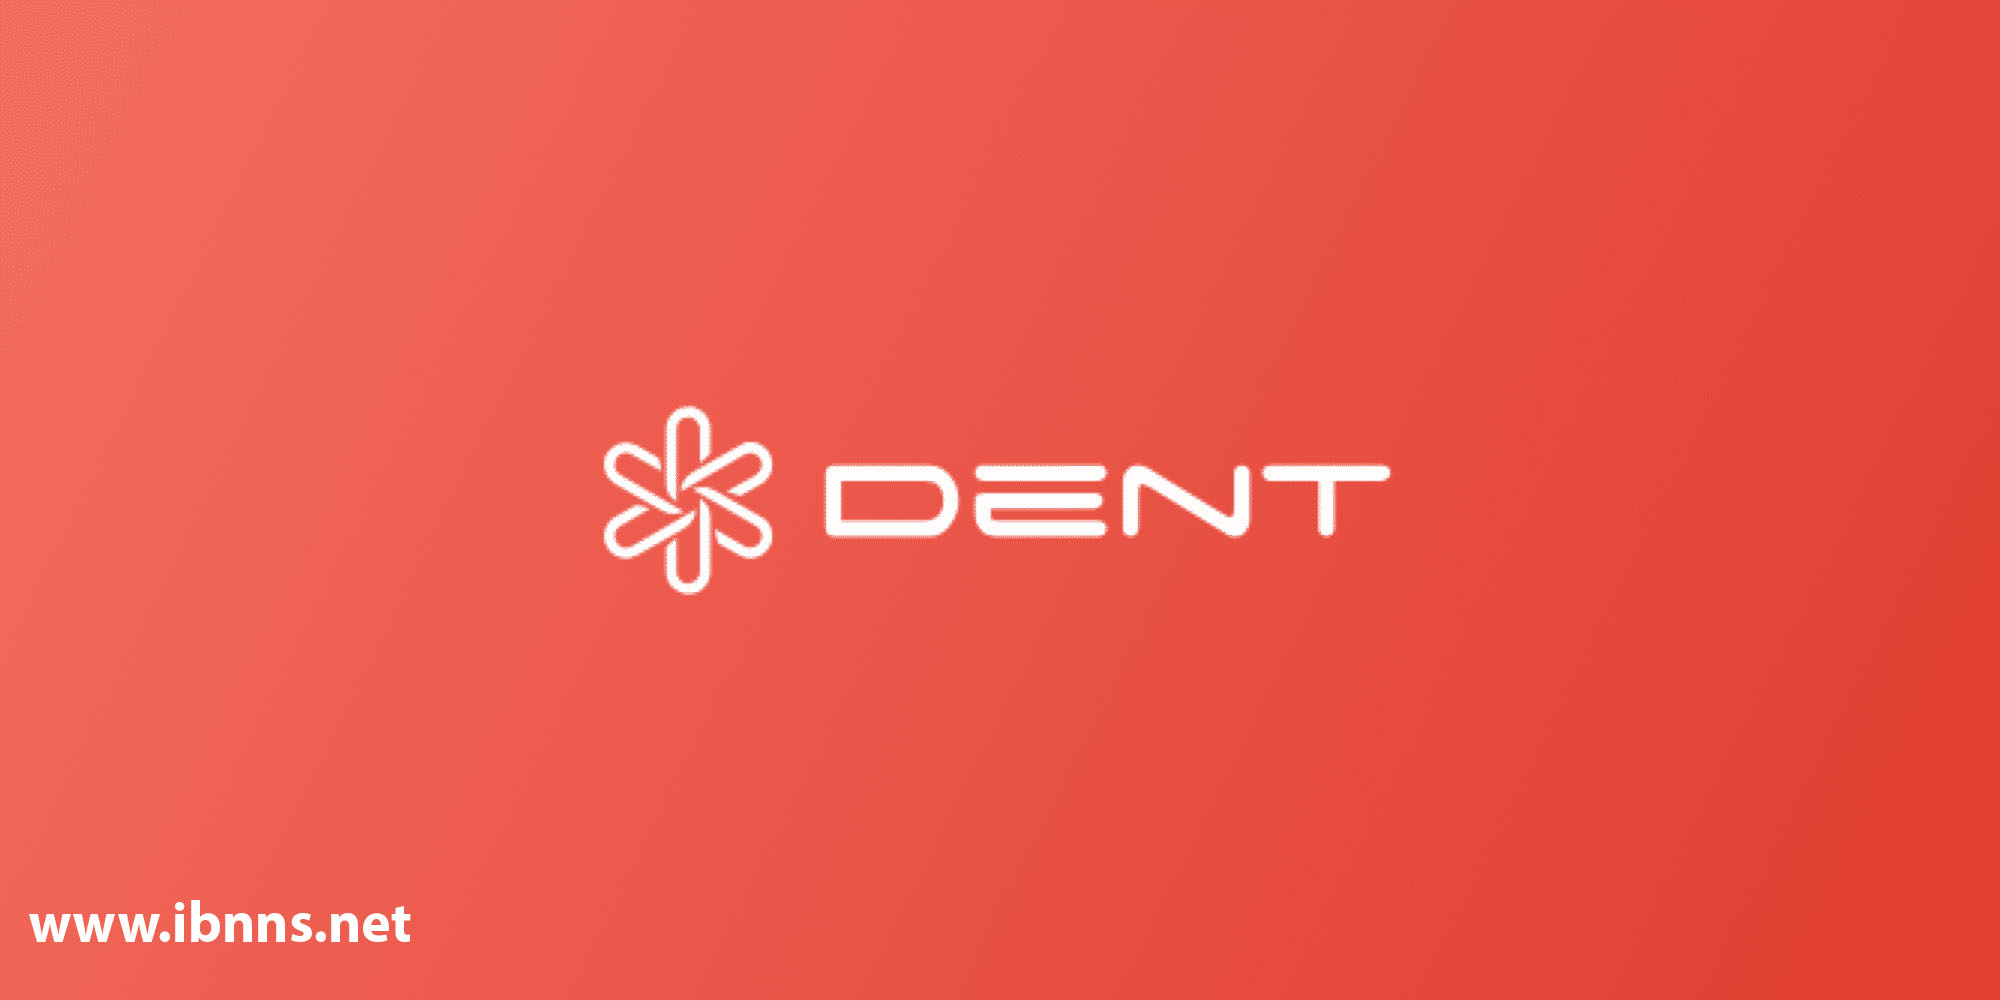 خرید دنت | فروش Dent | قیمت DENT